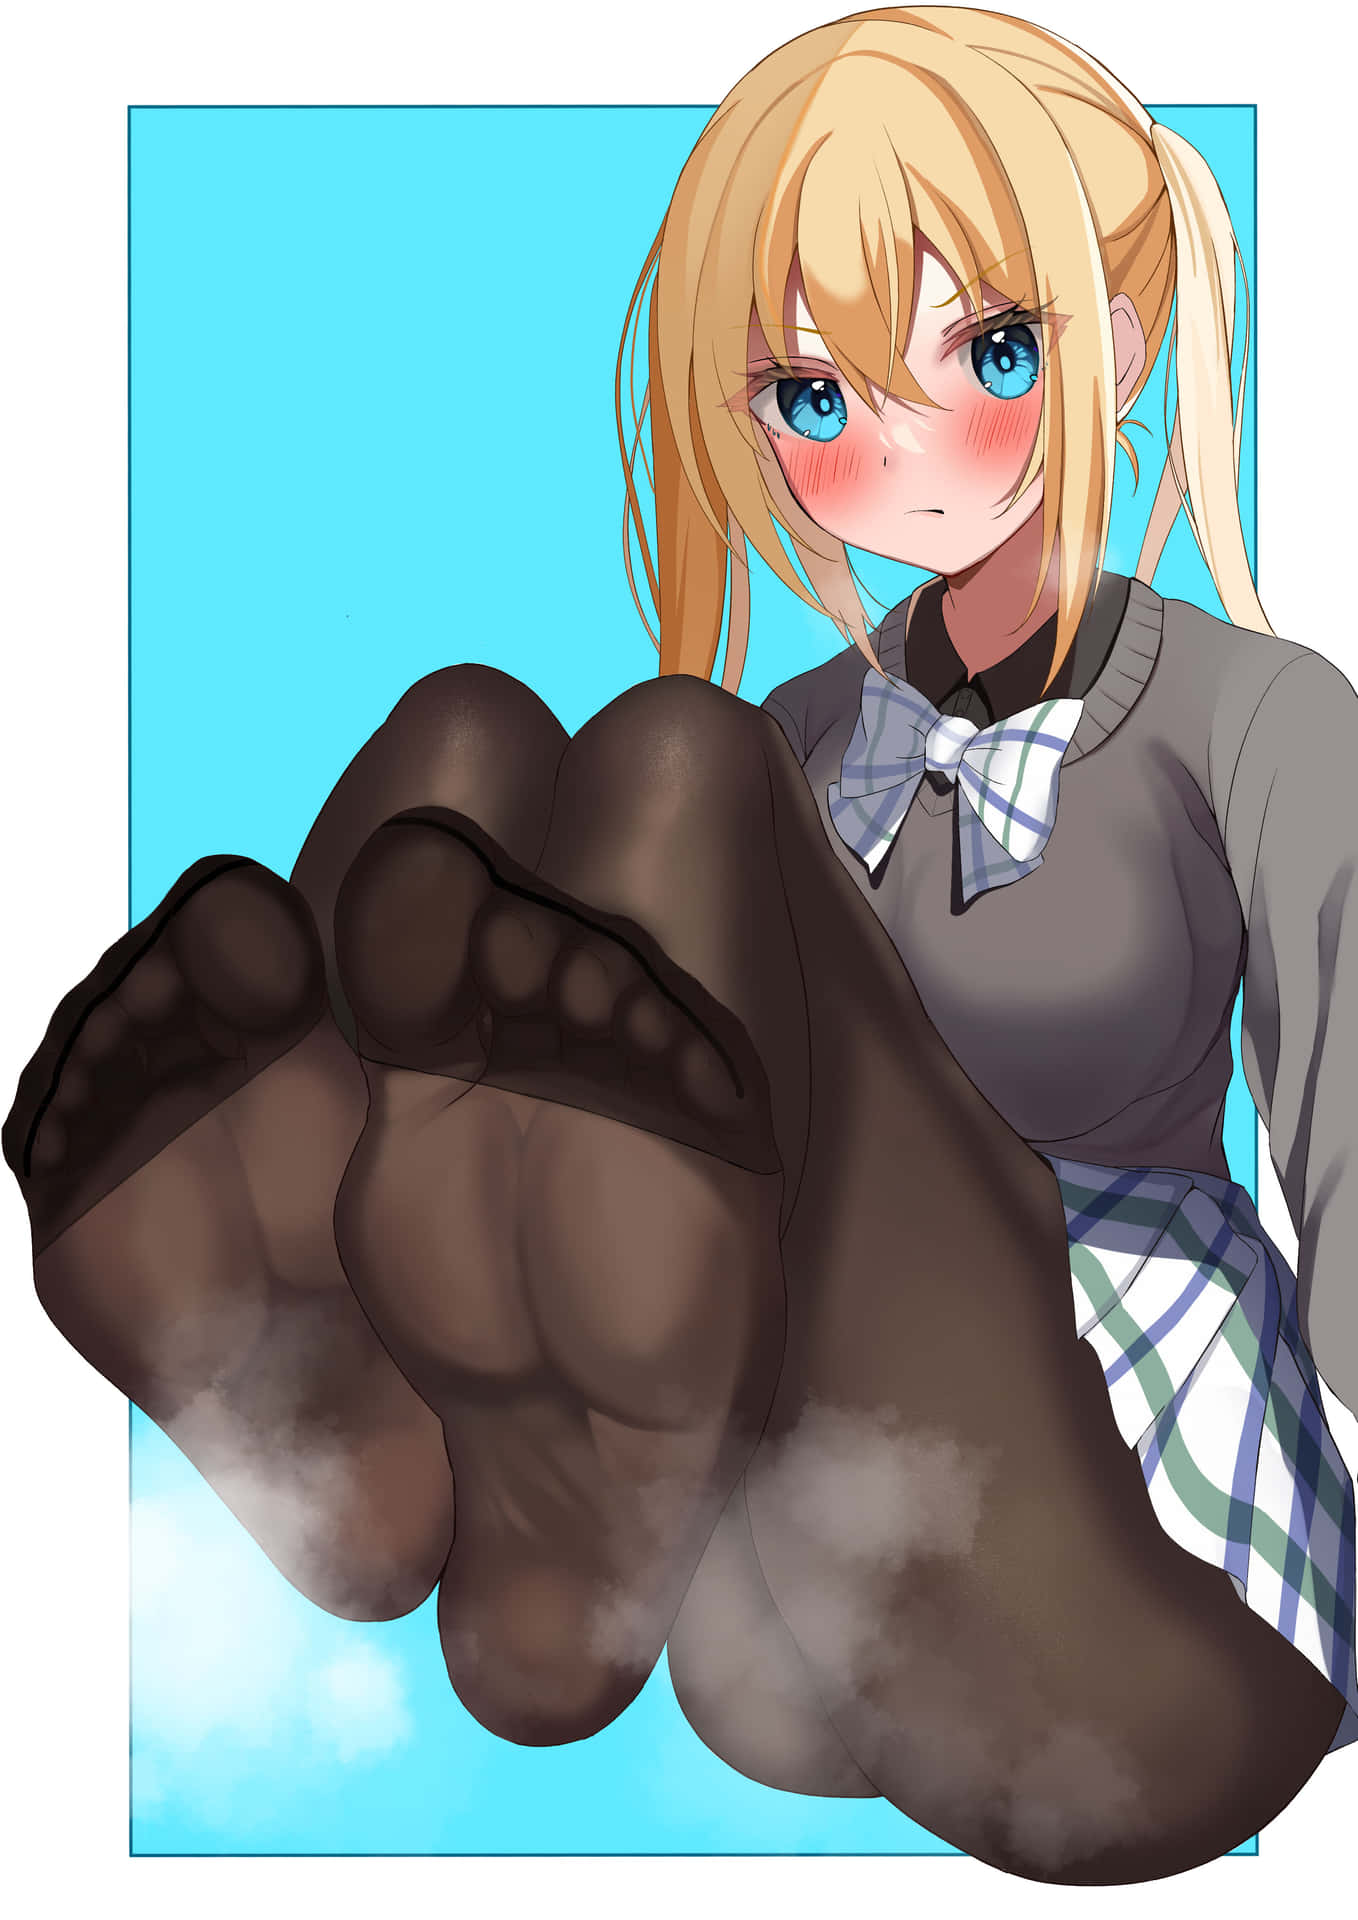 Anime feet stockings